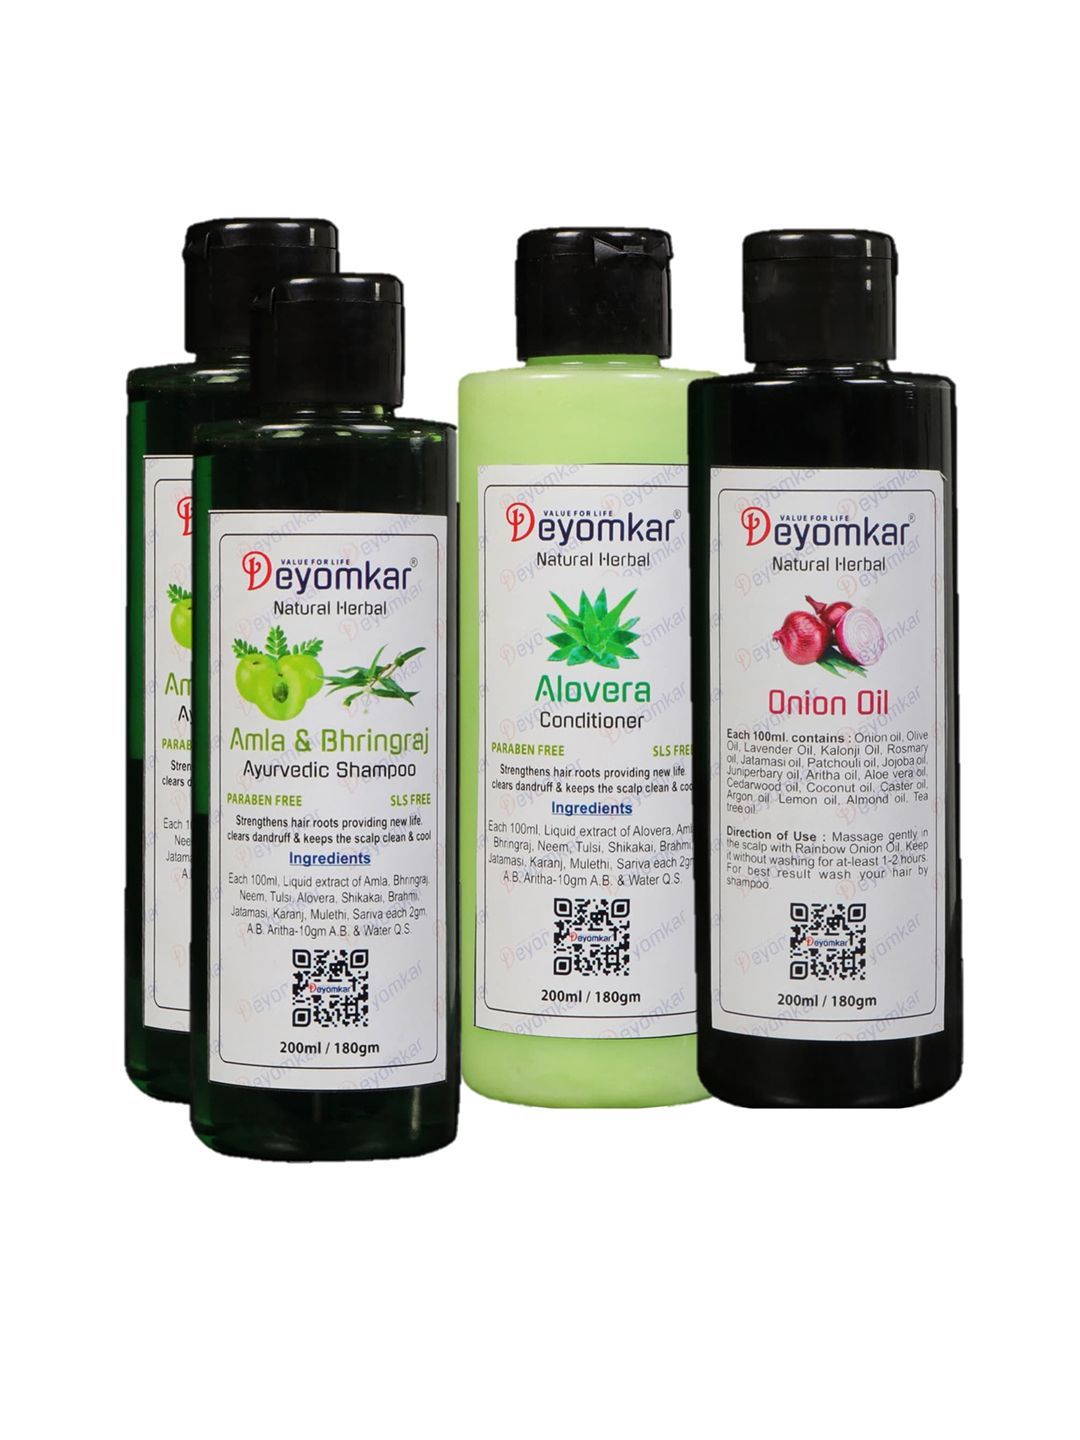 Deyomkar Ayurvedic Ayurvedic Hair Care Kit Price in India